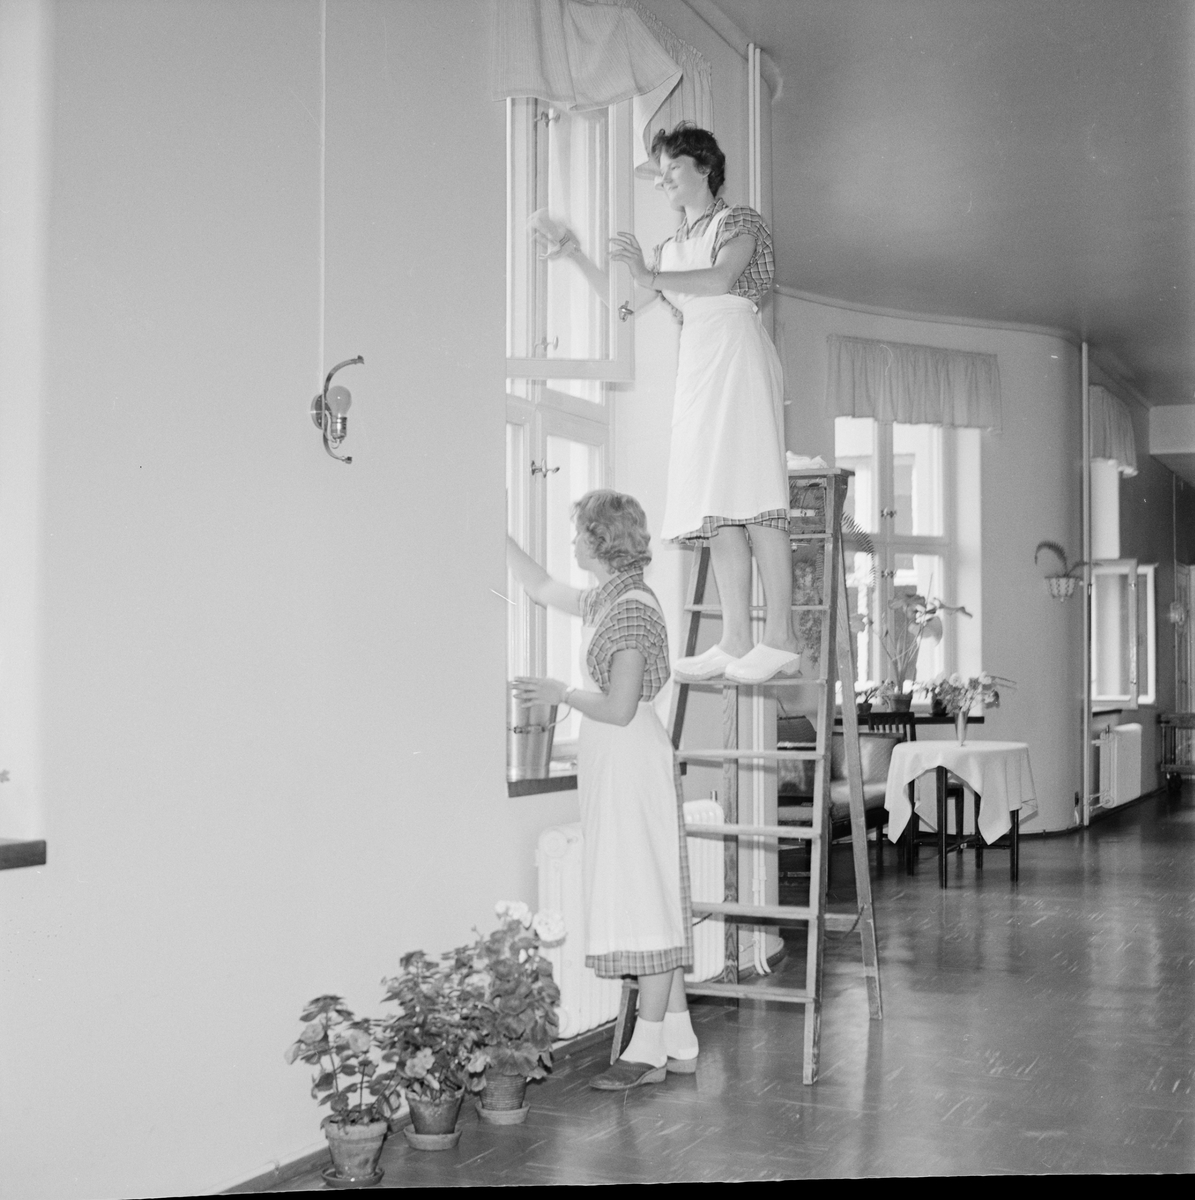 Akademiska sjukhuset i sommarberedskap, Uppsala, juli 1960